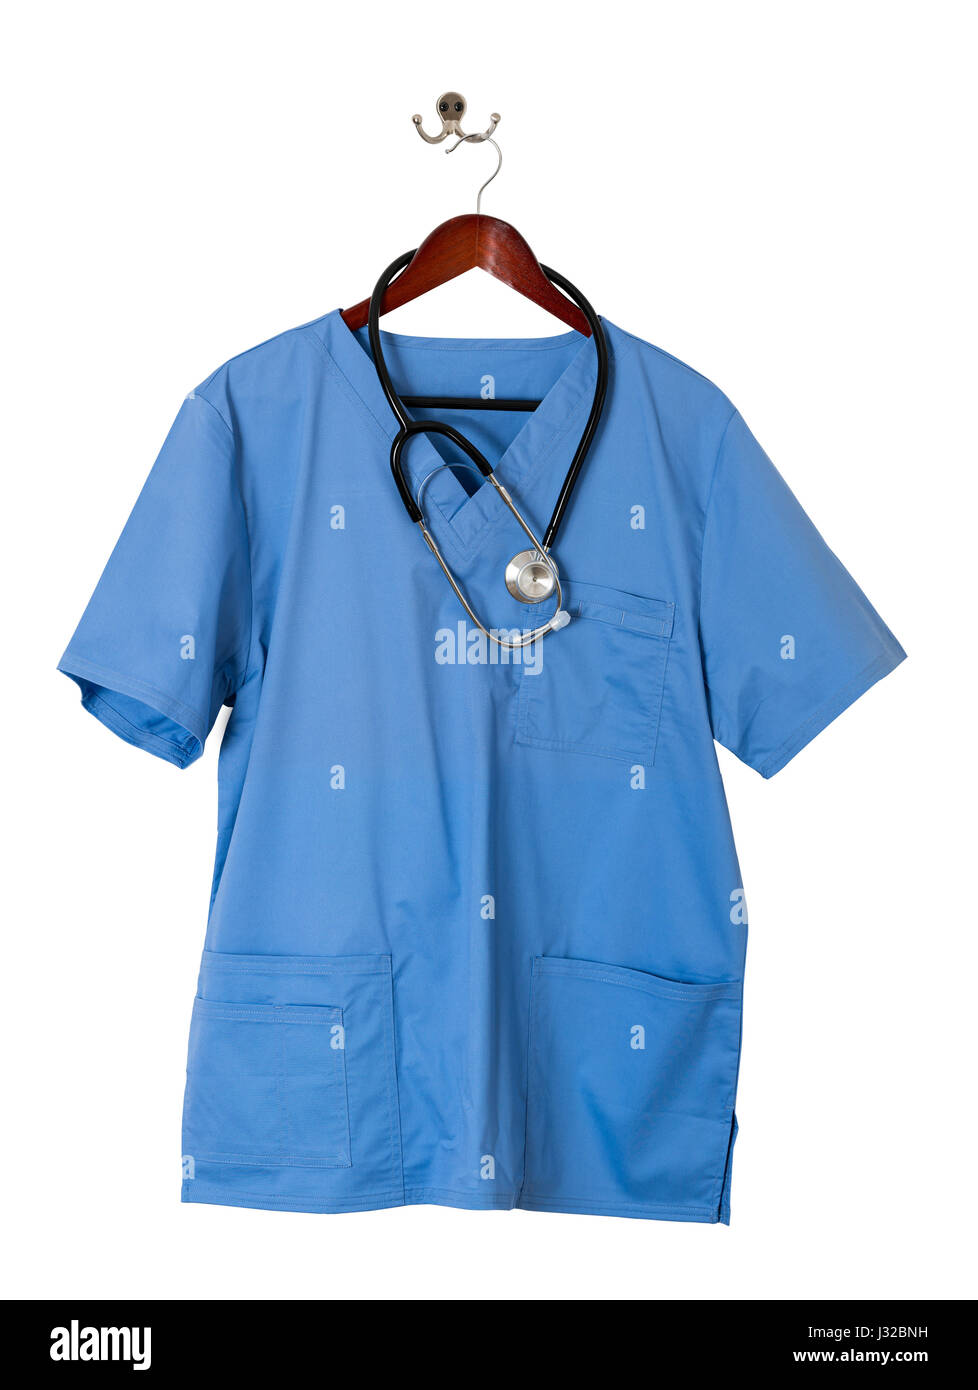 Blue medica Doctor scrubs uniform shirt with stethoscope Stock Photo